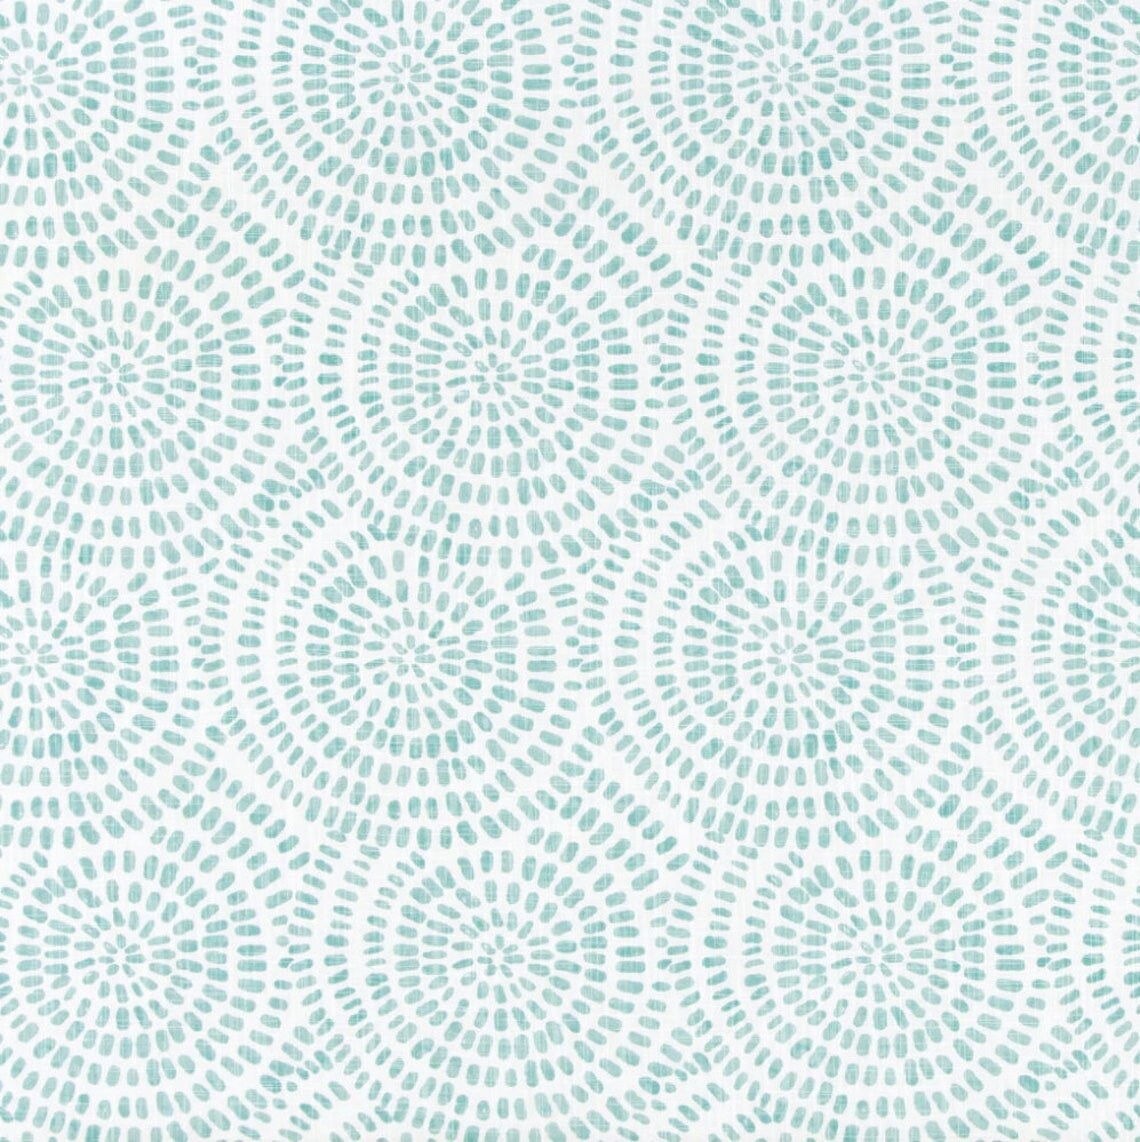 scallop valance in cecil cancun blue watercolor dot circular geometric